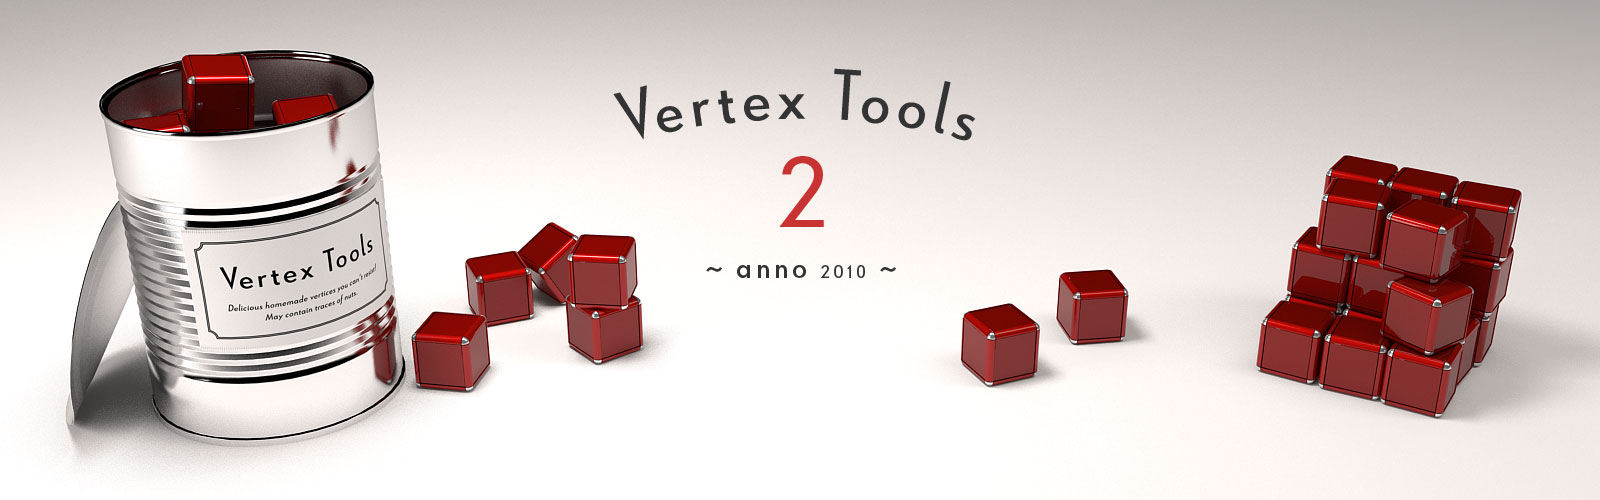 顶点编辑插件 TT Vertex Tools v2.0.3 for Sketchup 2019/2021 Win版 安装教程